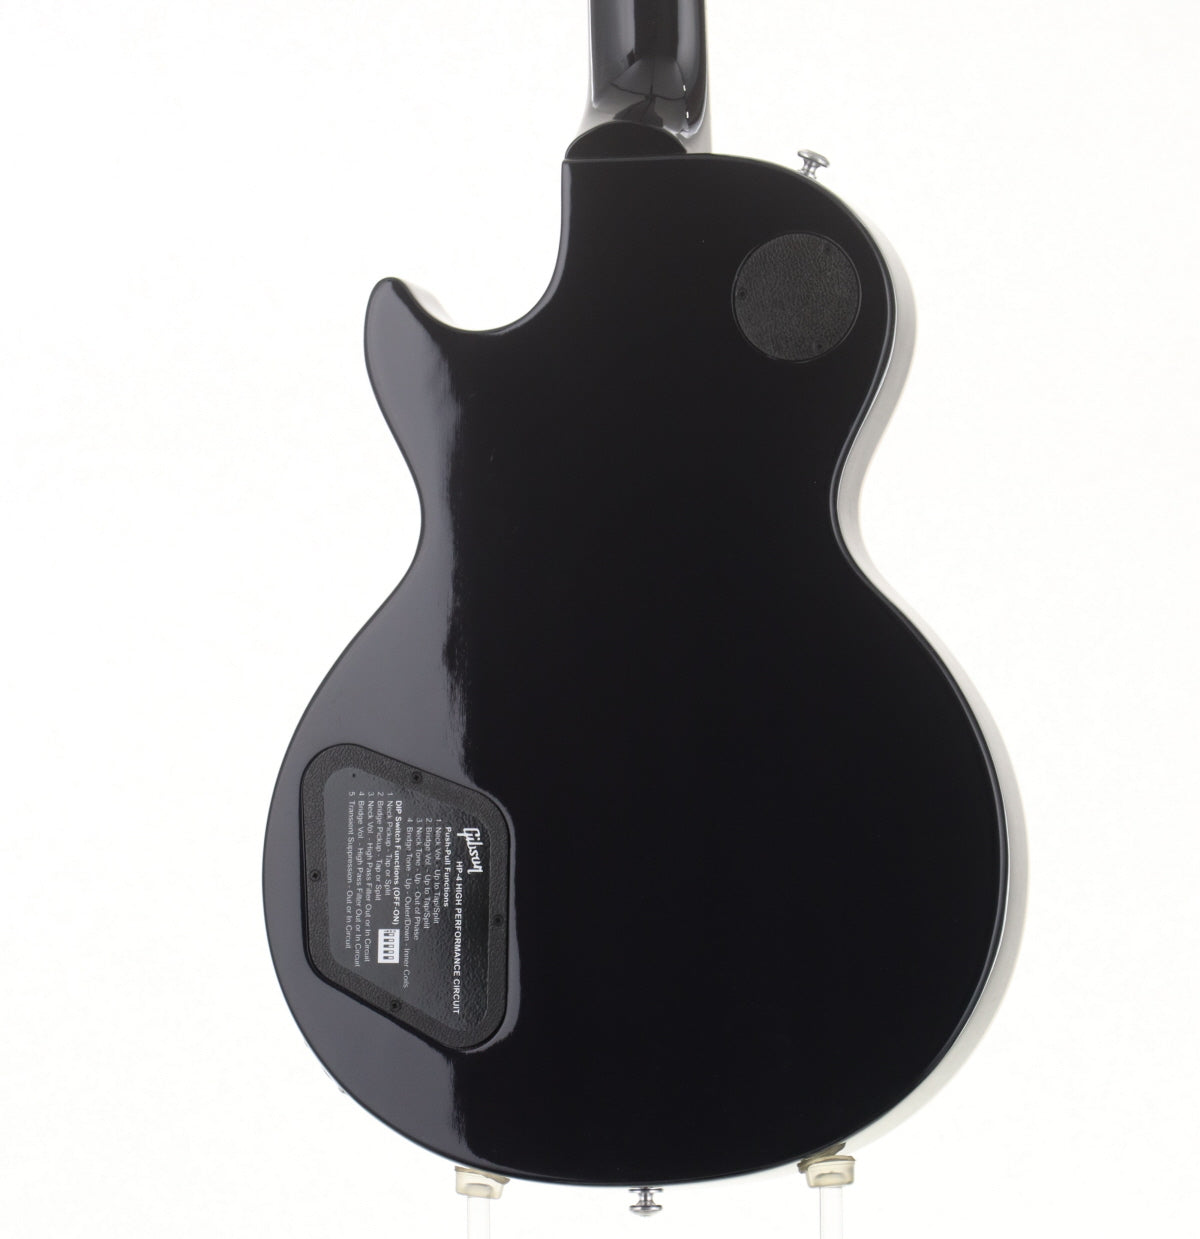 [SN 190001919] USED Gibson USA / Les Paul Standard 2019 Blueberry Burst [03]